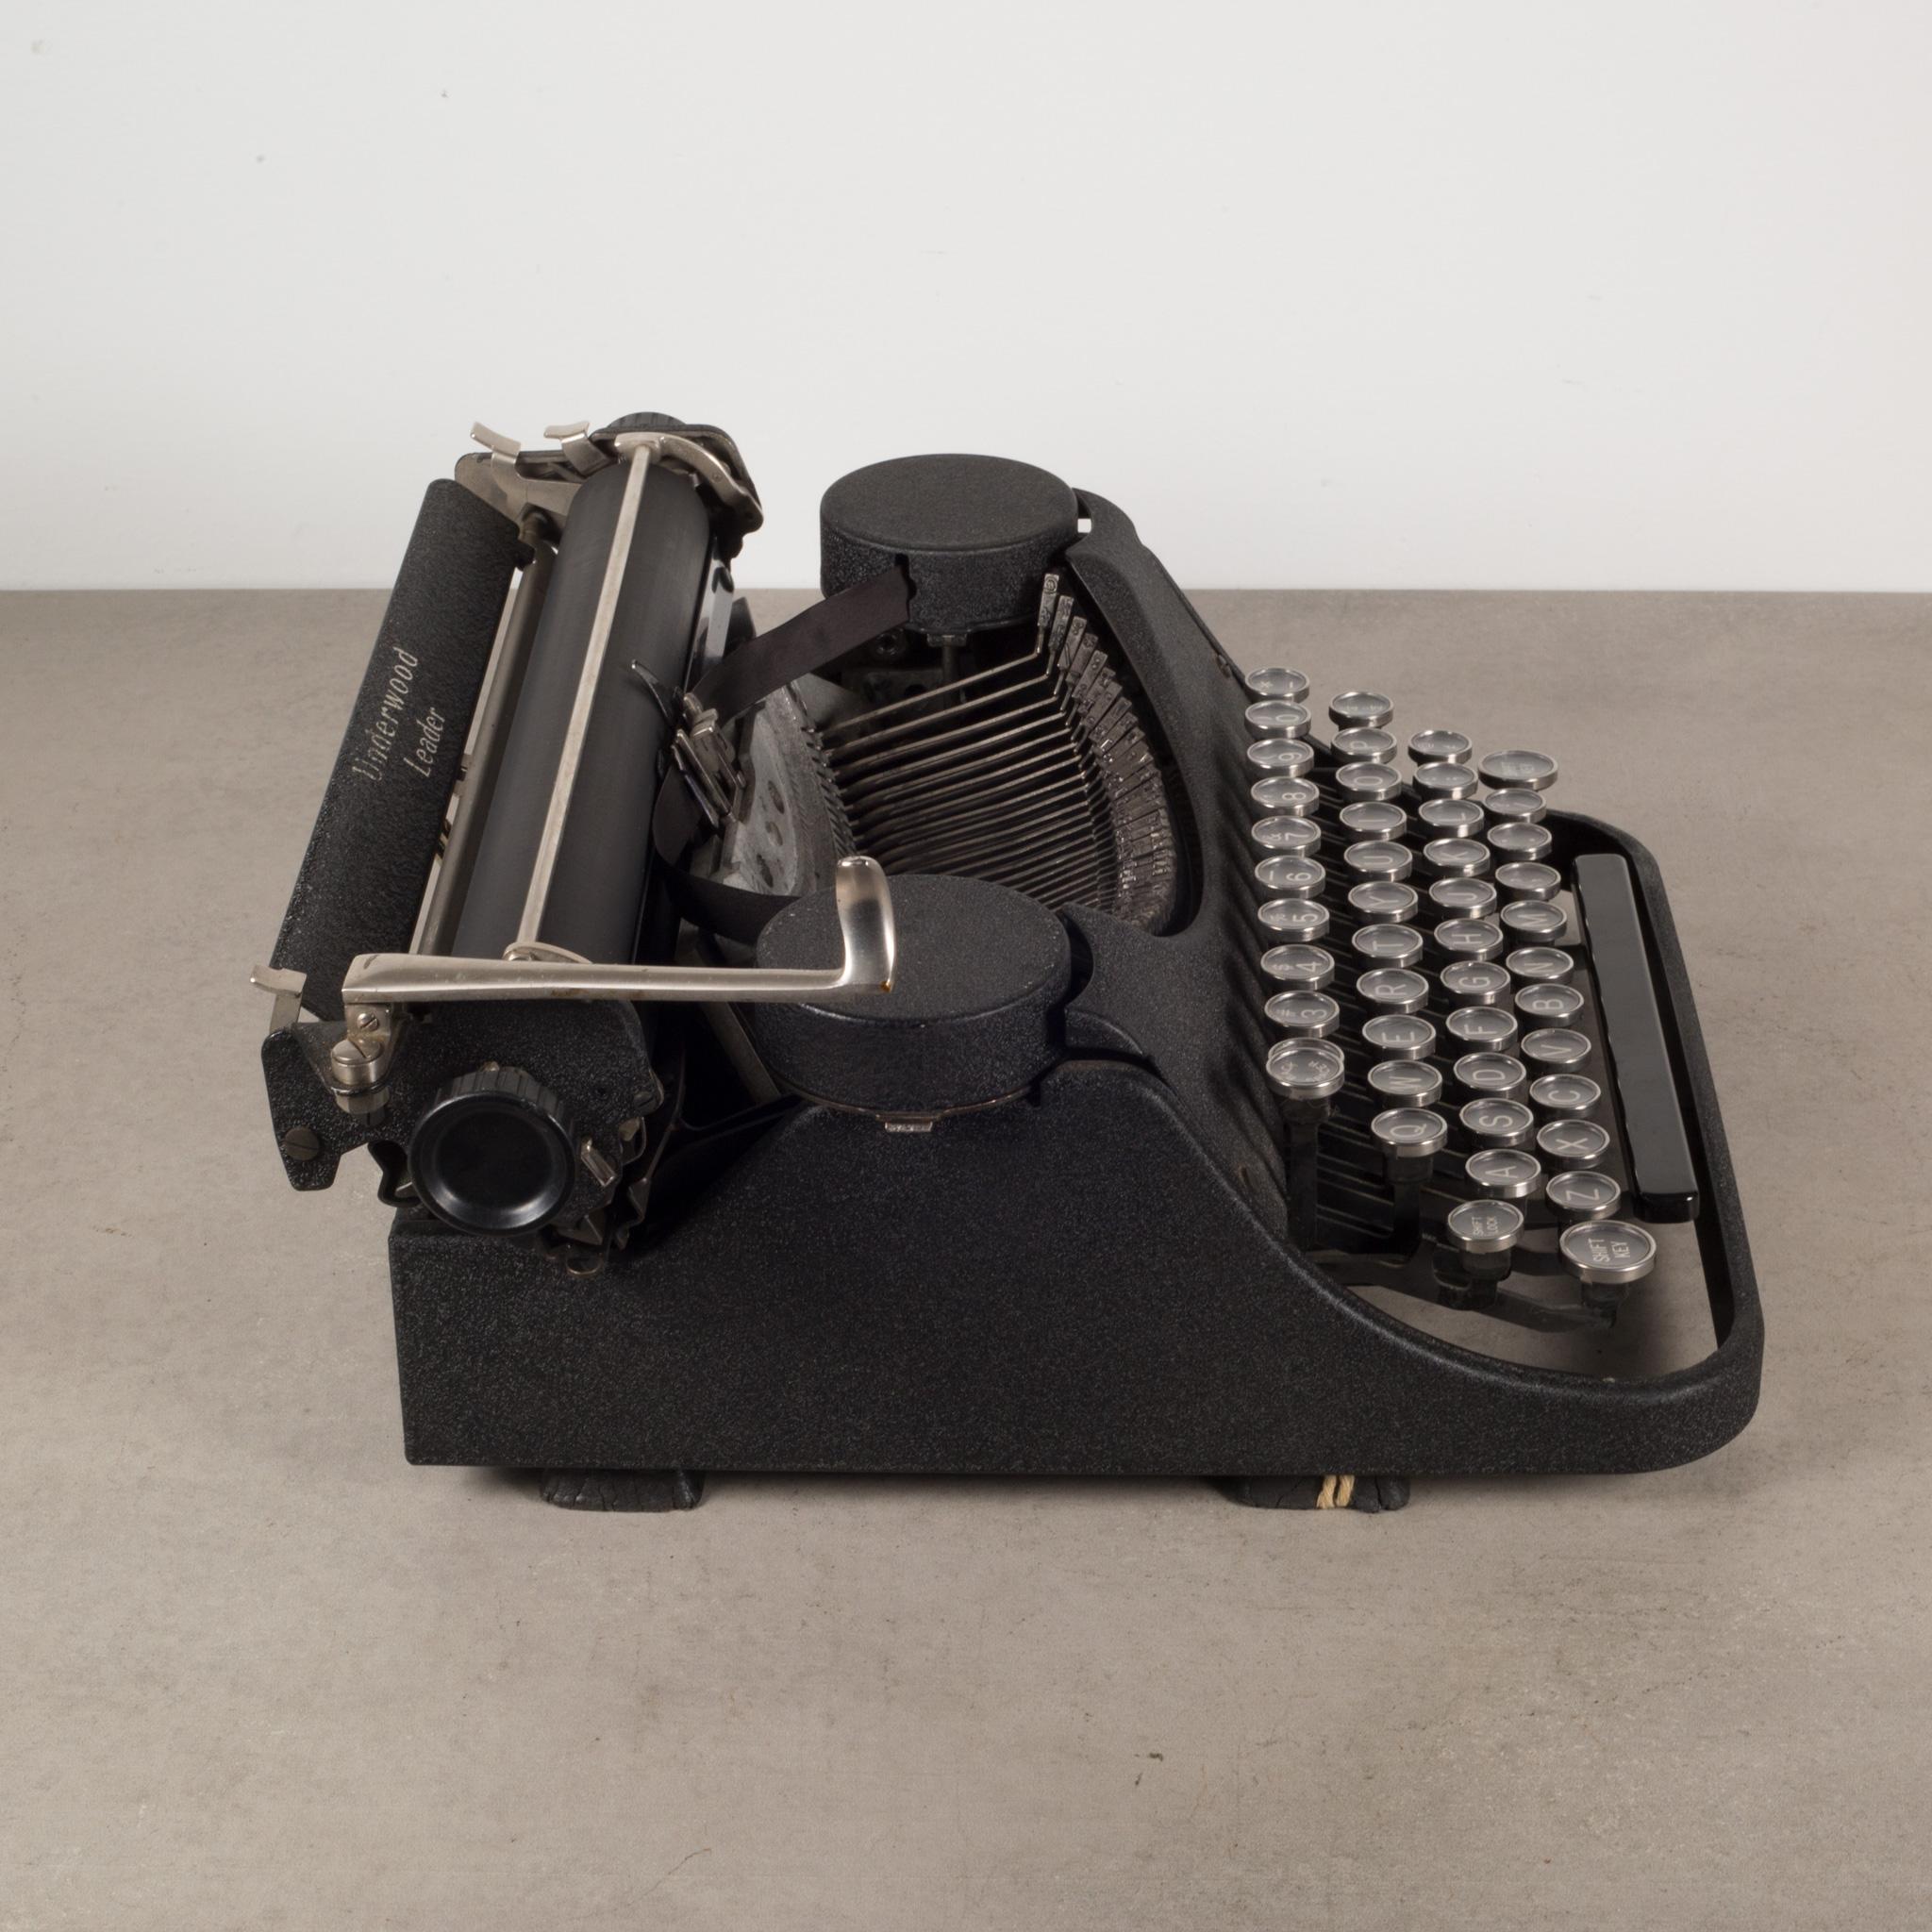 Steel Antique Refurbished Portable Underwood Leader Typewriter, c.1938